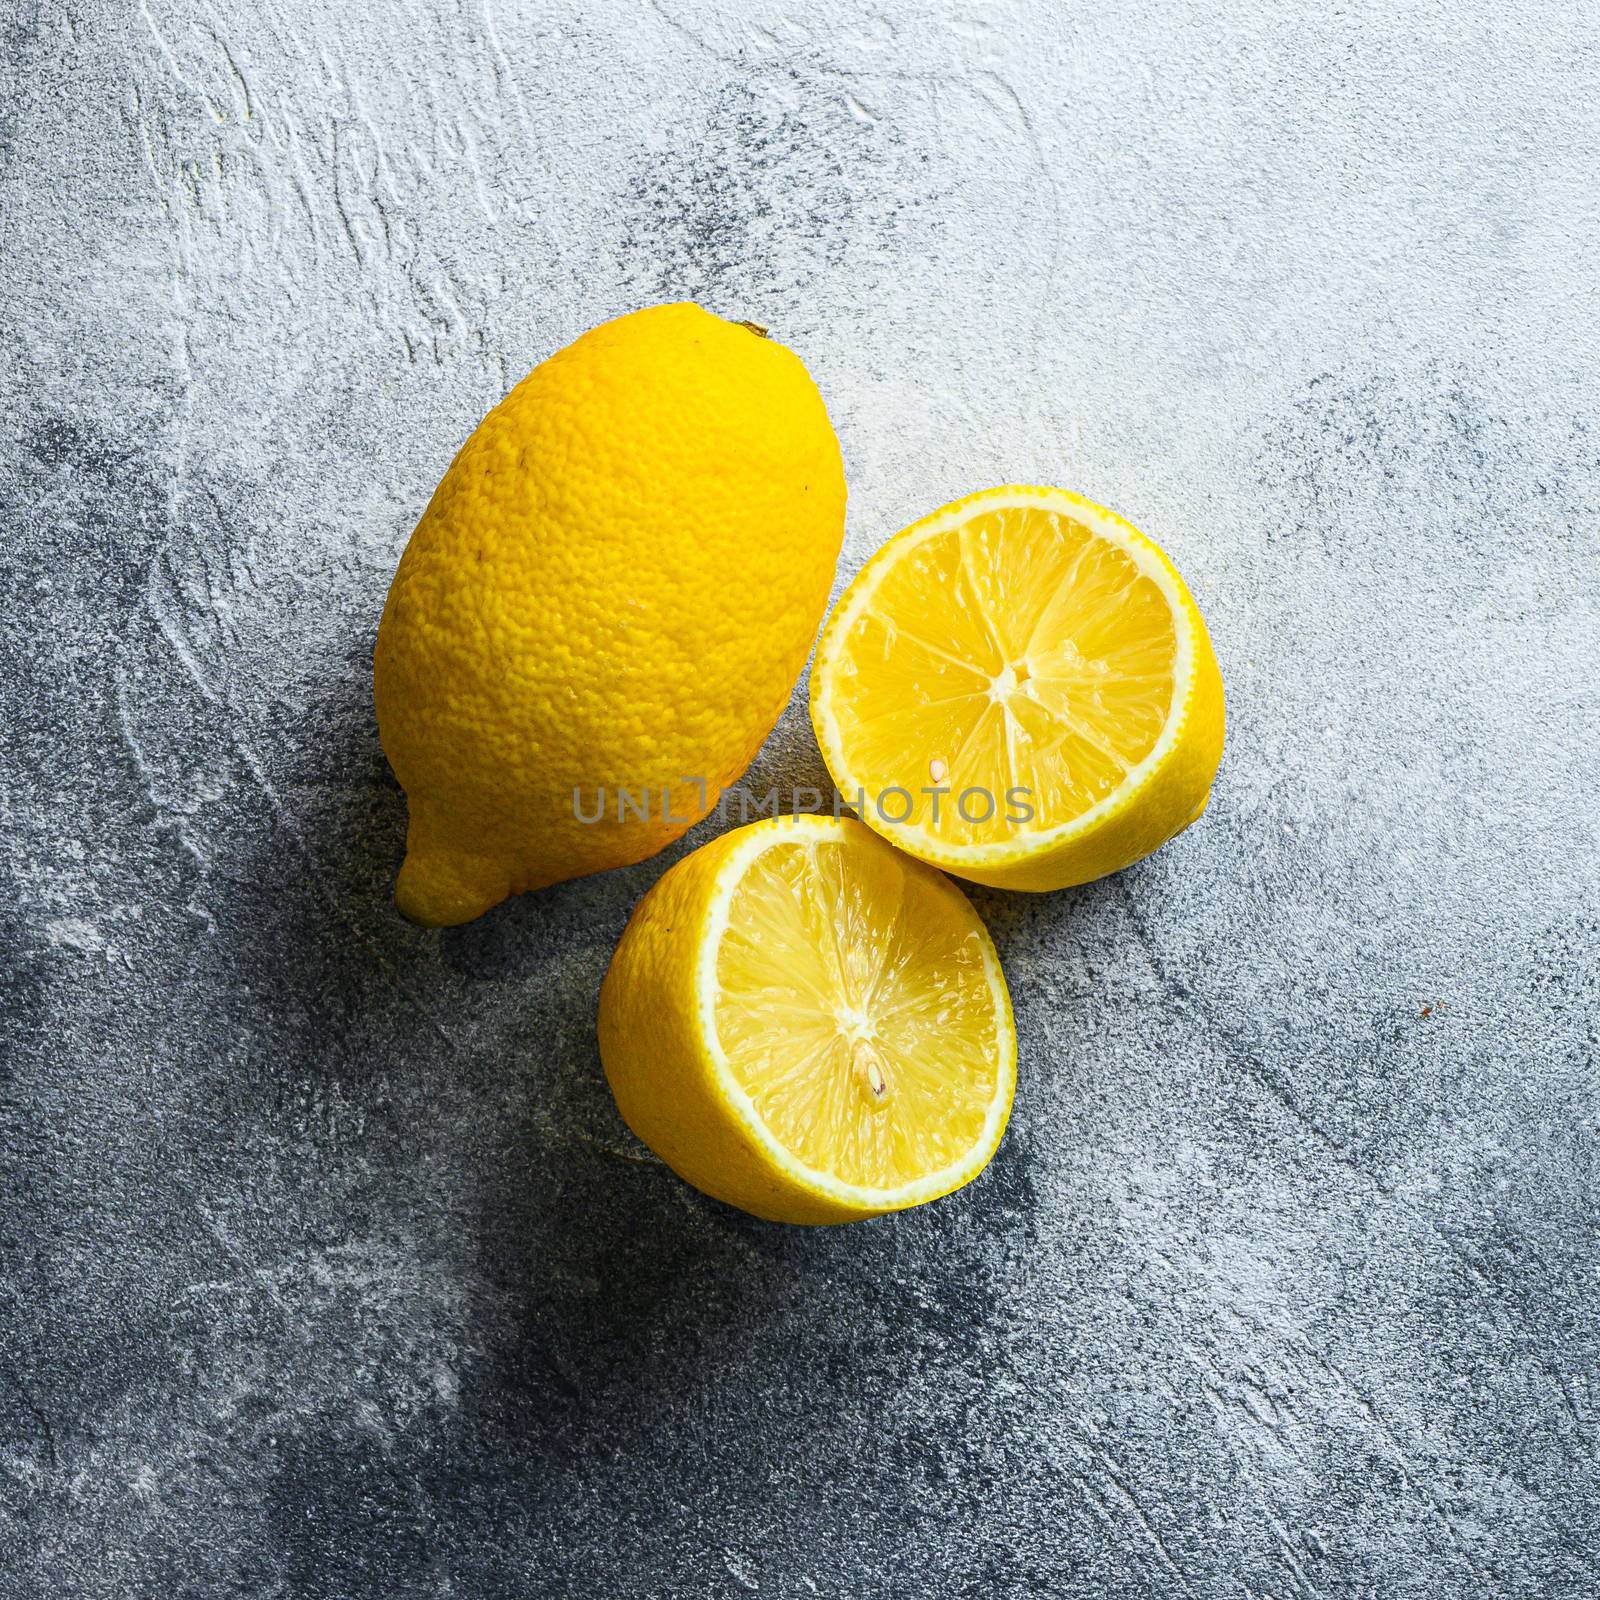 Ripe juicy lemons on gray background. Whole yellow lemon and lemon cut half, top view, vitamin c source by Ilianesolenyi